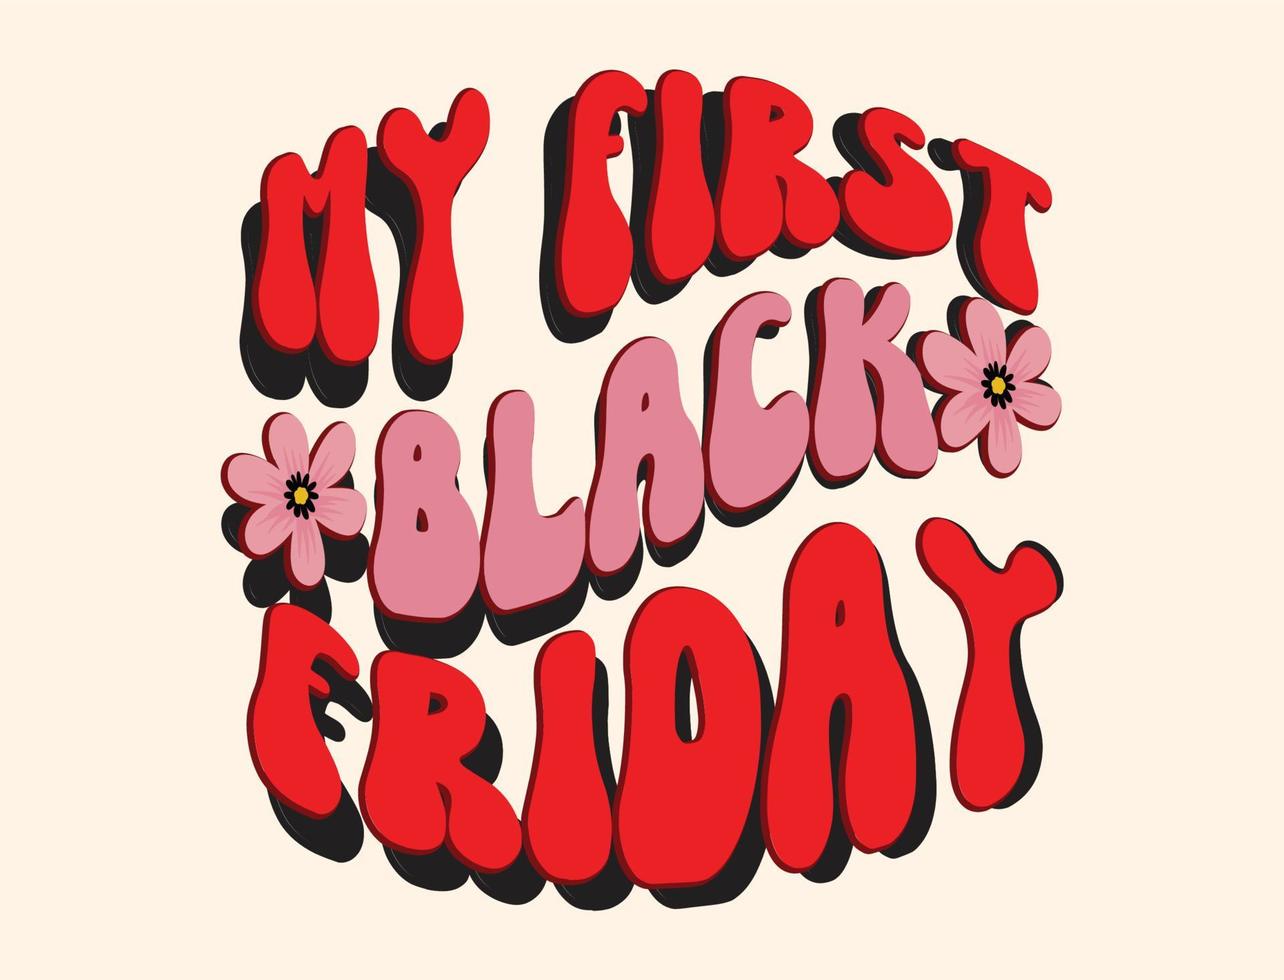 Black friday t-shirt design vector